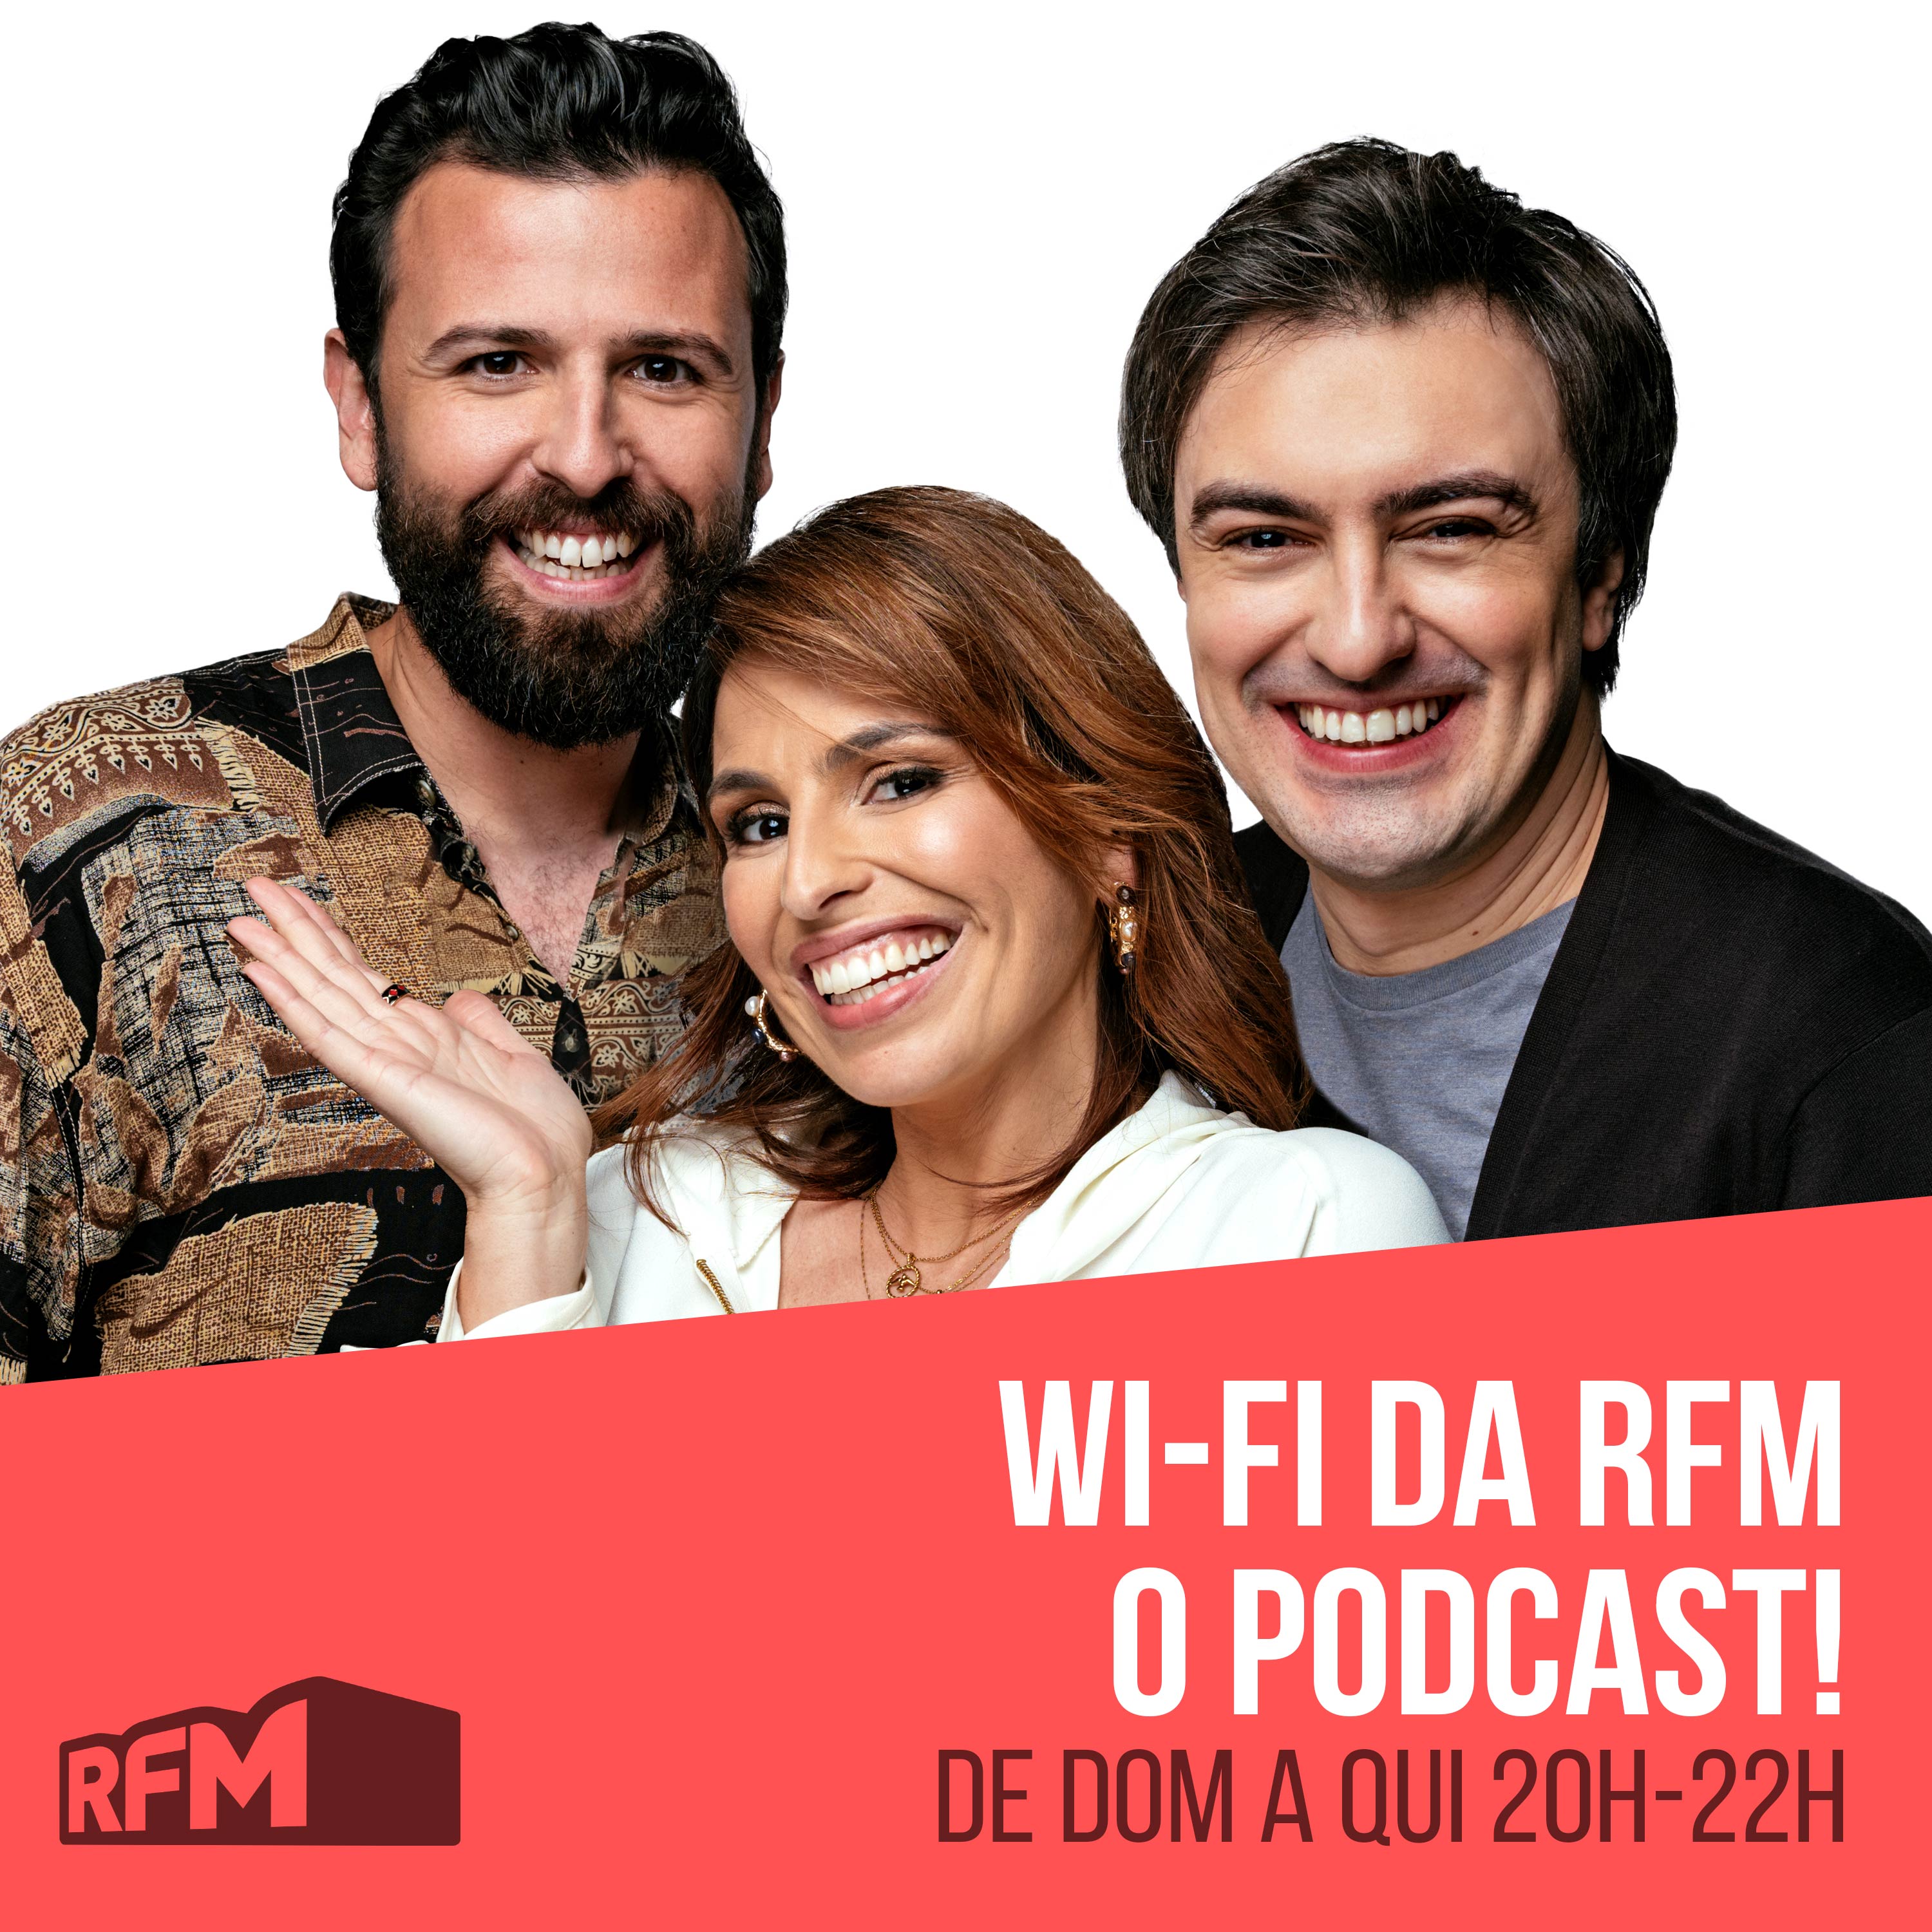 Wi-Fi PODCAST DAVID CARREIRA - Abril 2020